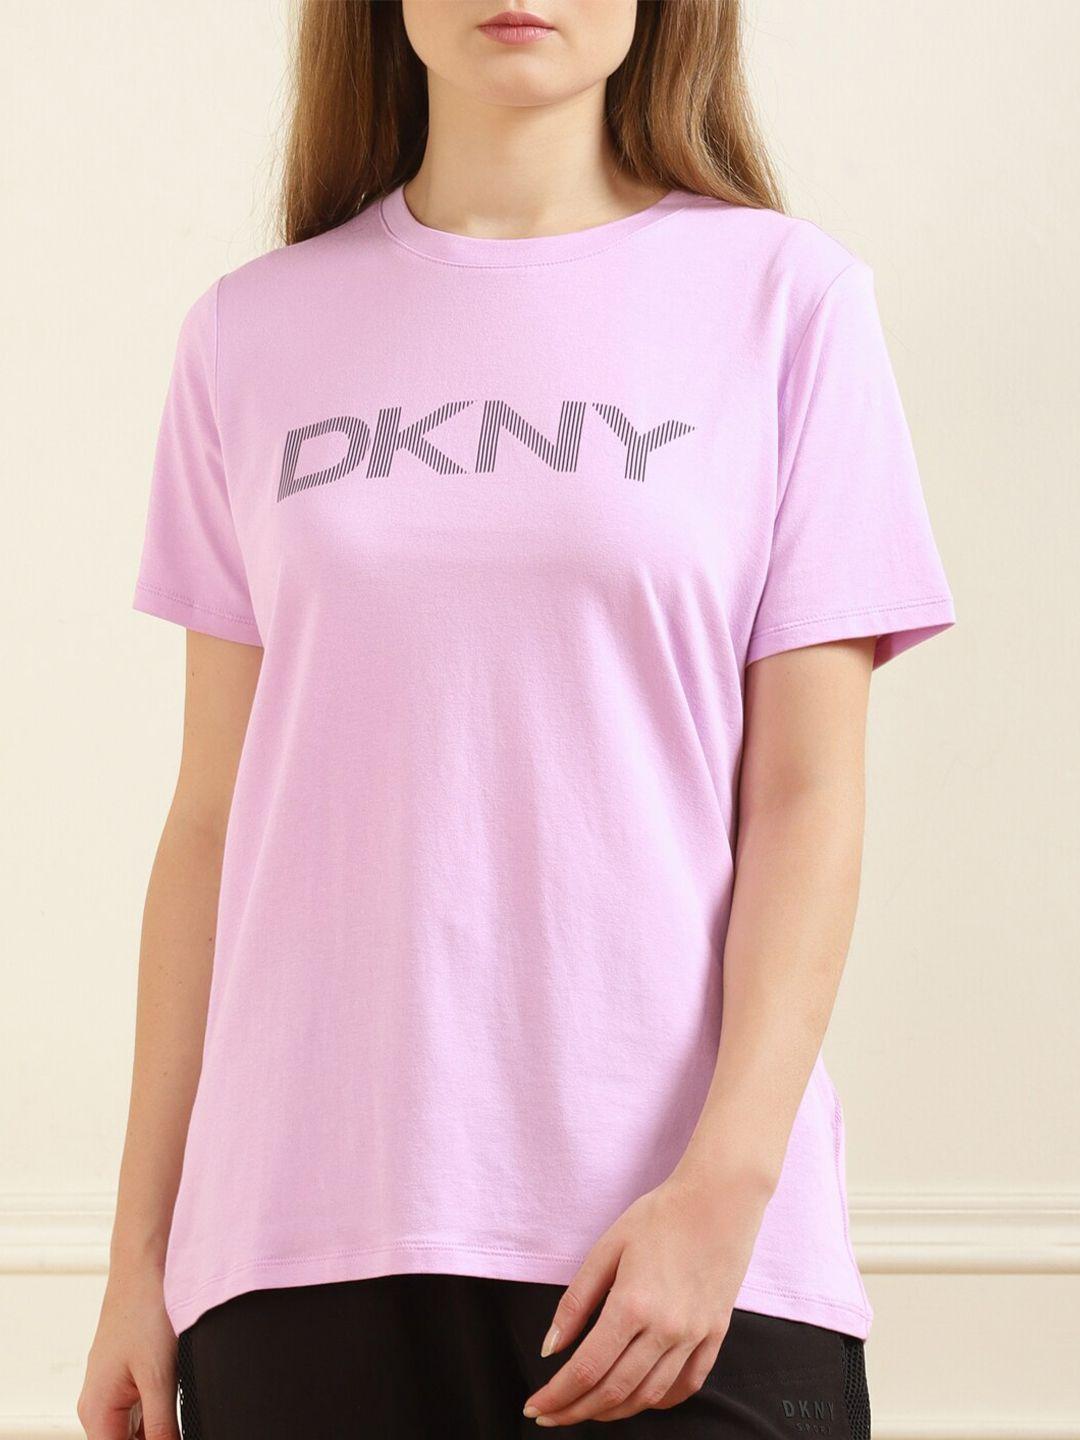 dkny-women-purple-typography-printed-t-shirt